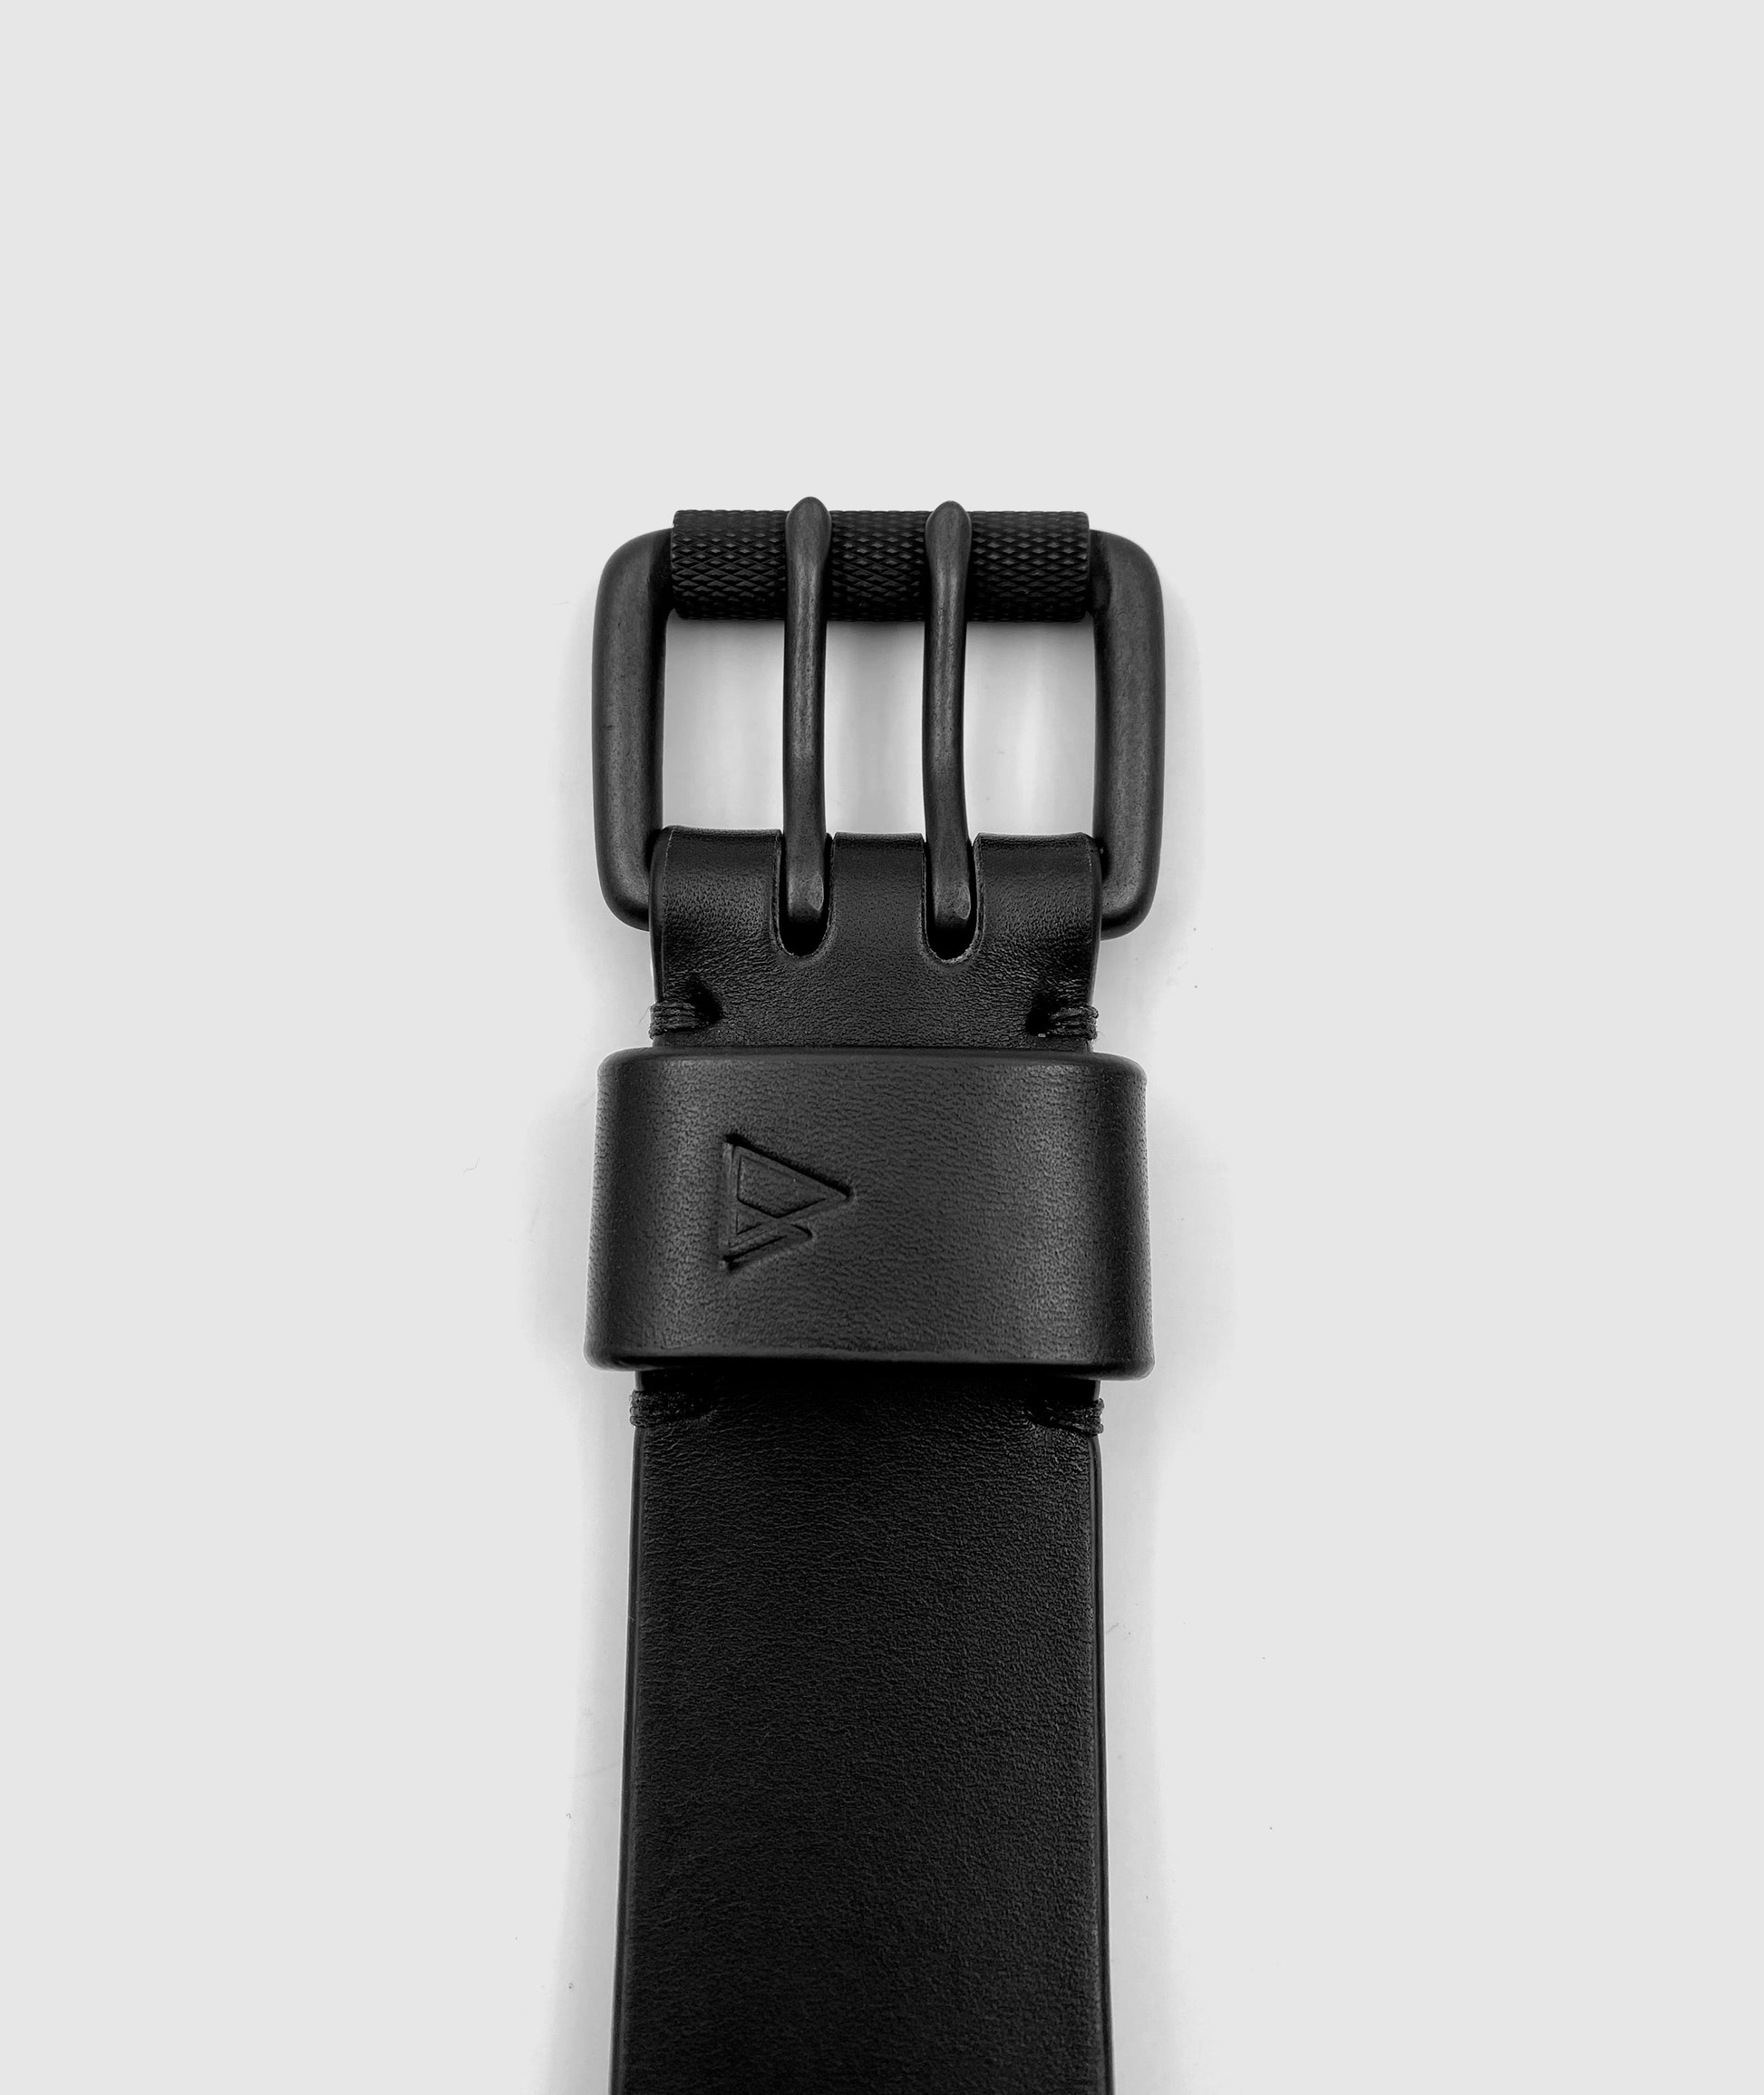 custom fit handmade Black leather roller buckle belt by darksails - ceinture sur mesure faite main en cuir noir